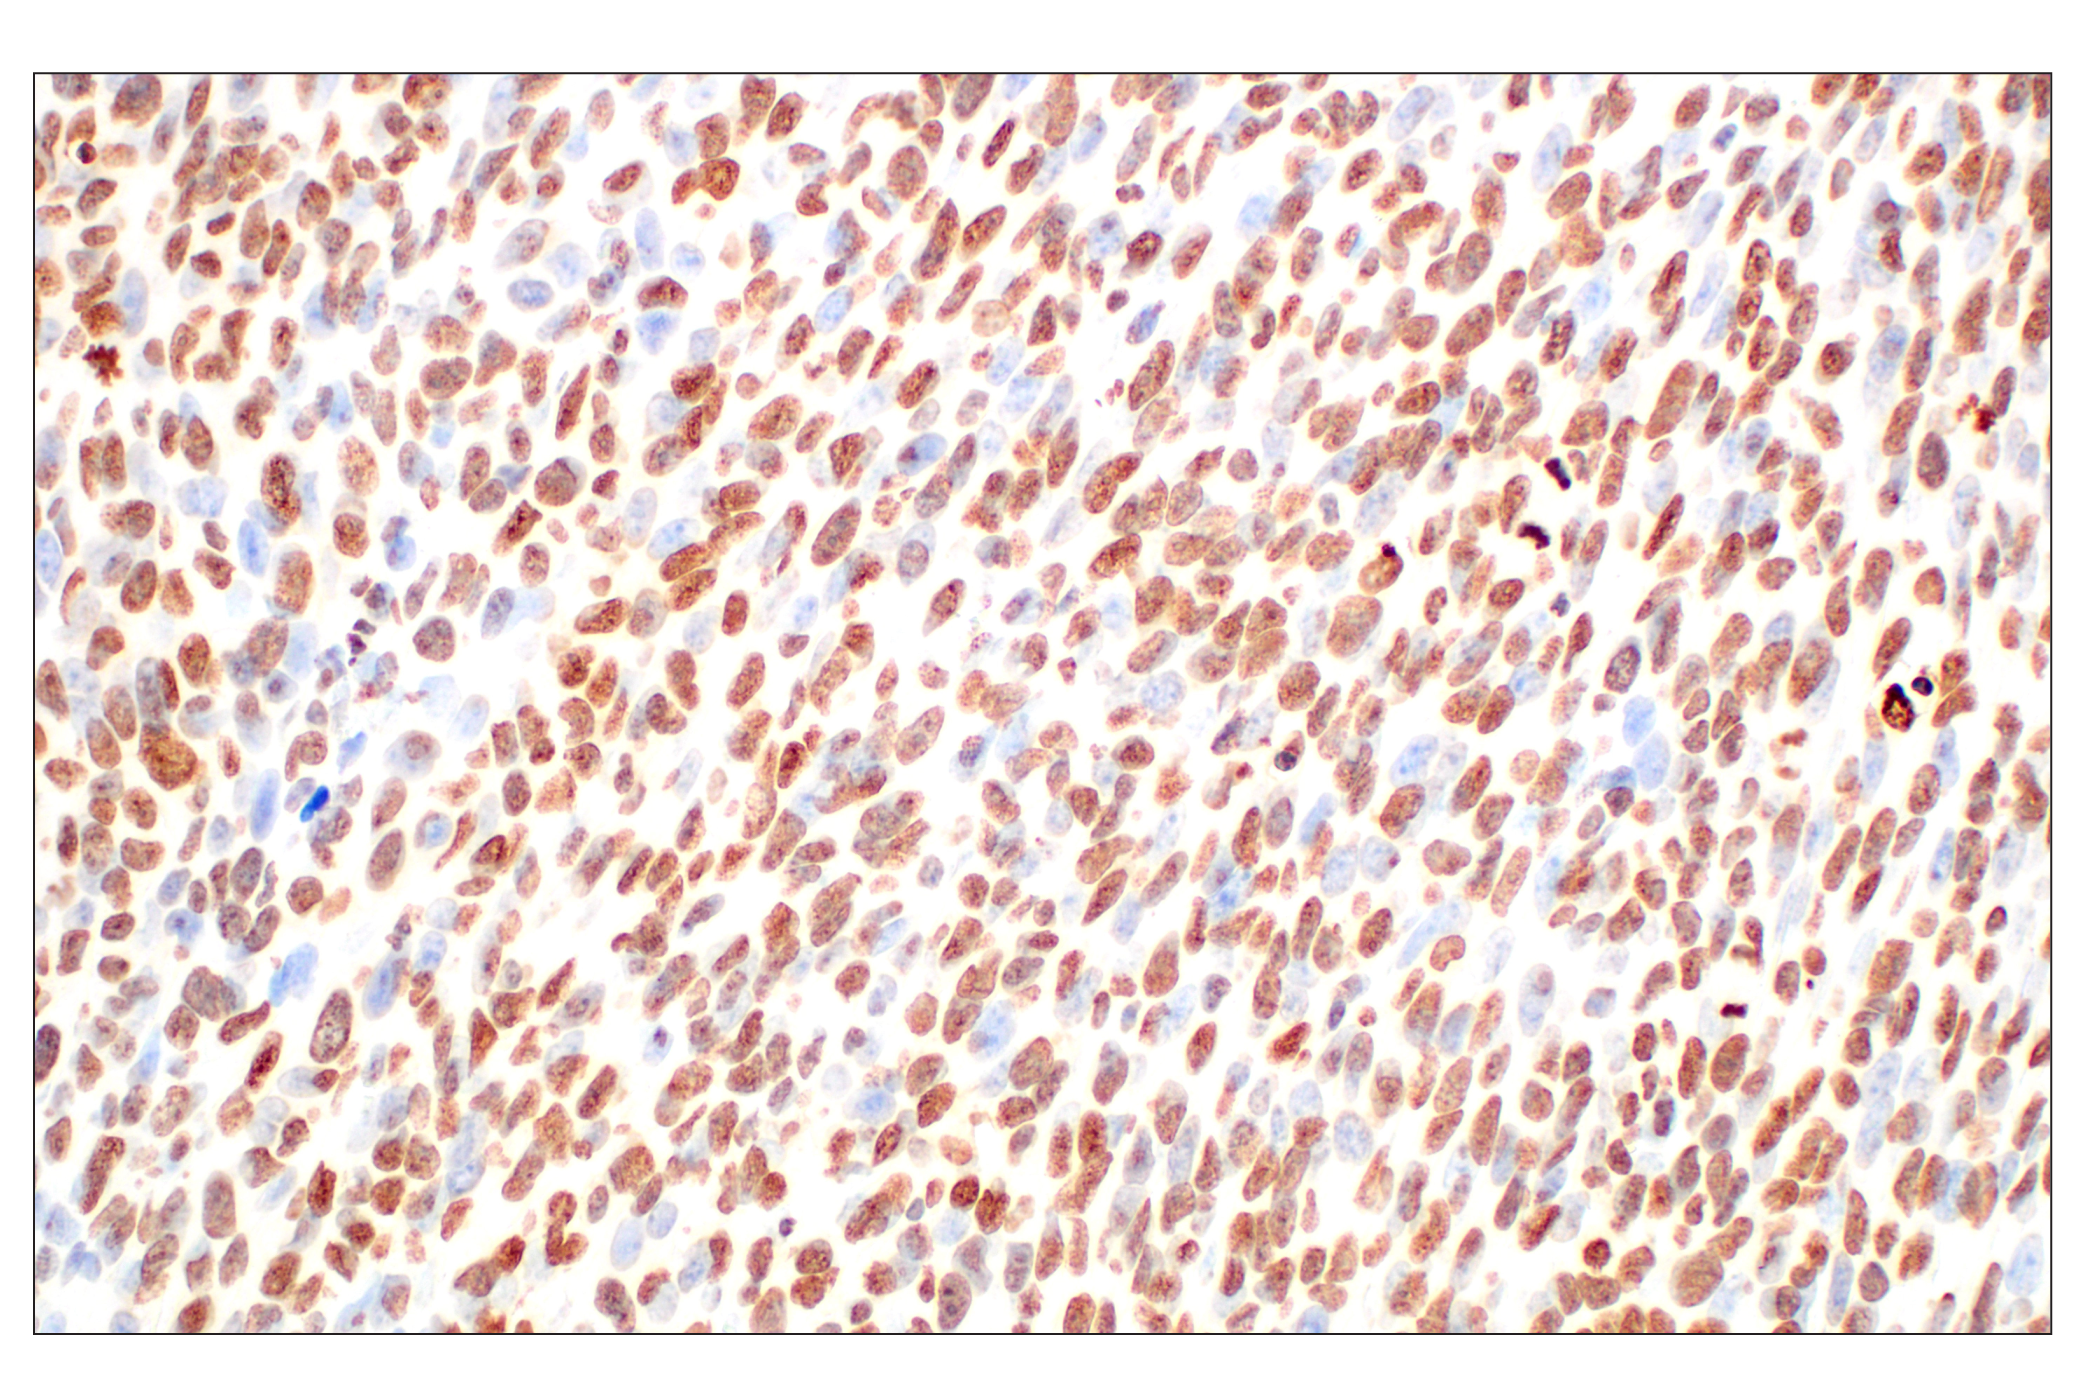  Image 17: Acetyl-Histone Antibody Sampler Kit